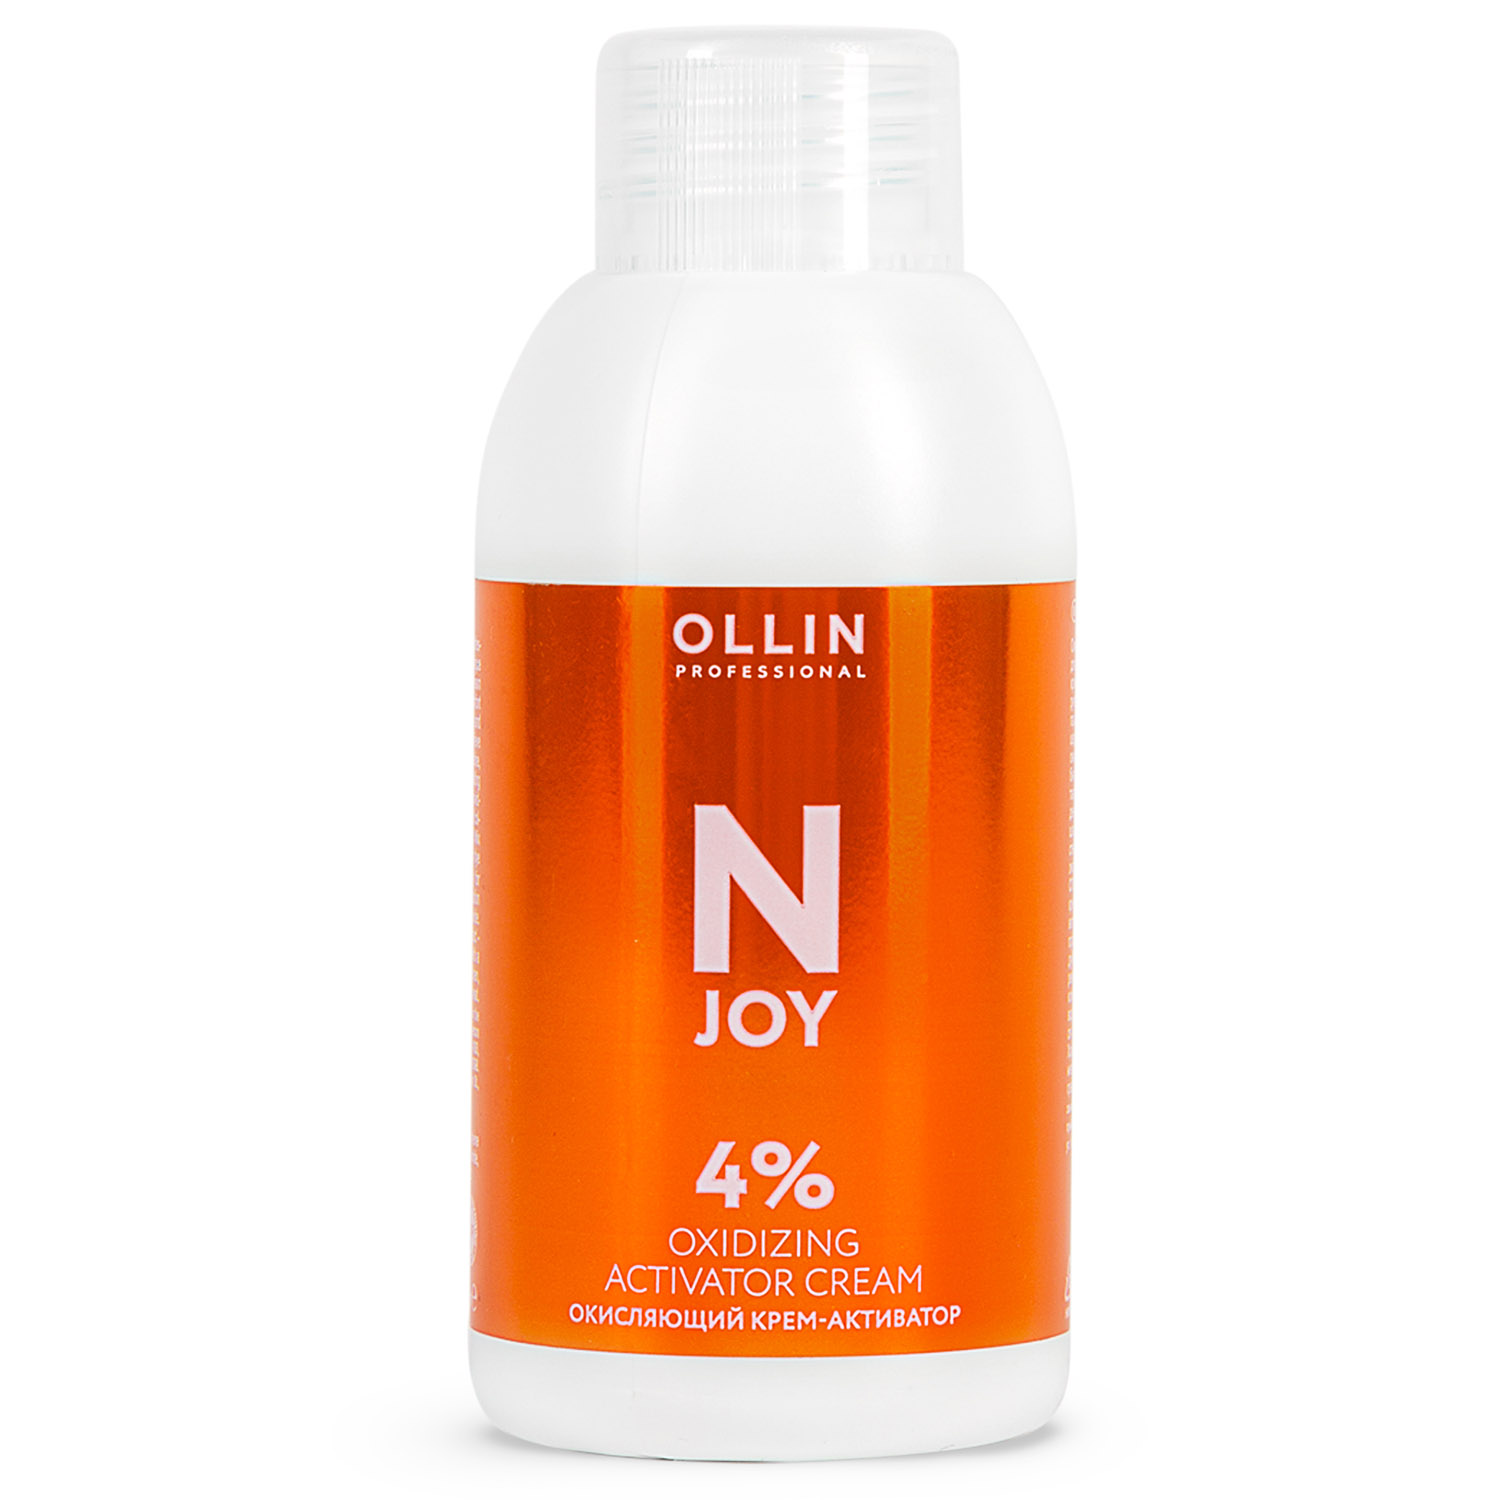 Ollin Professional Окисляющий крем-активатор 4%, 100 мл (Ollin Professional, N-Joy) окисляющий крем активатор для краски n joy 100мл крем активатор 4%